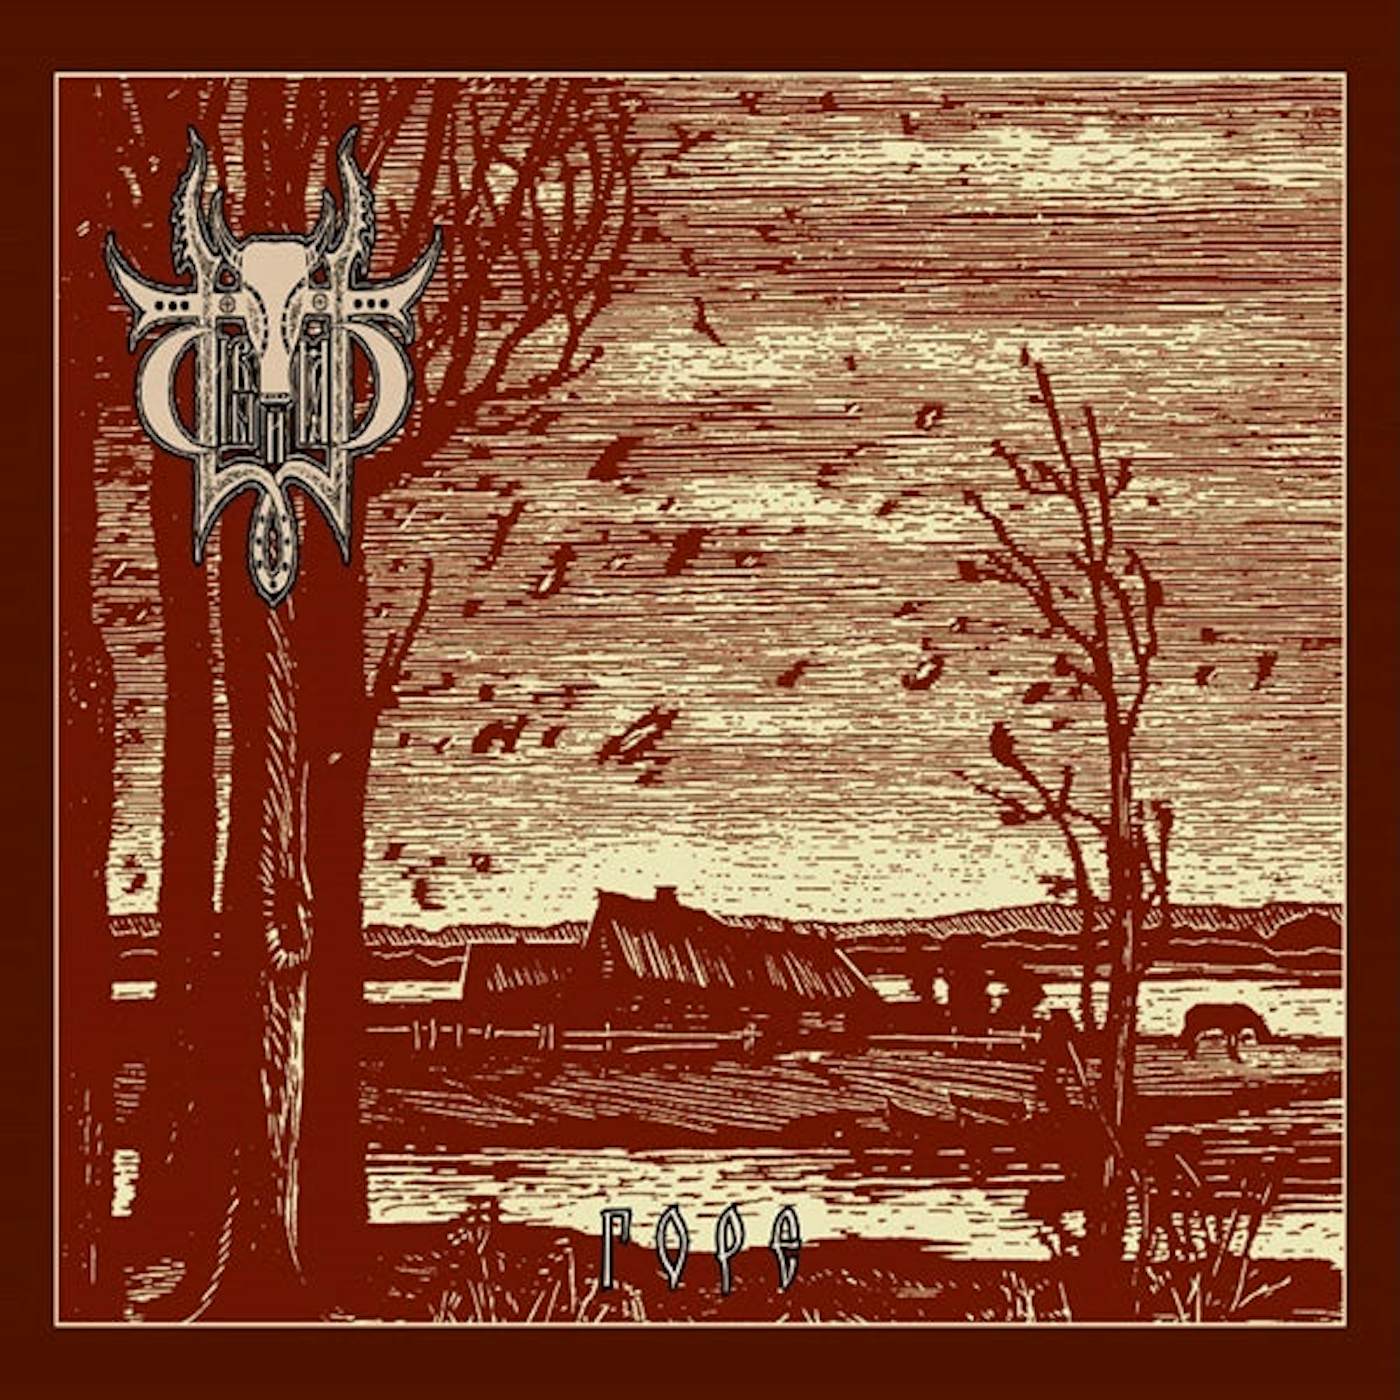 Sivyj Yar LP - Rope / Grief (Vinyl)